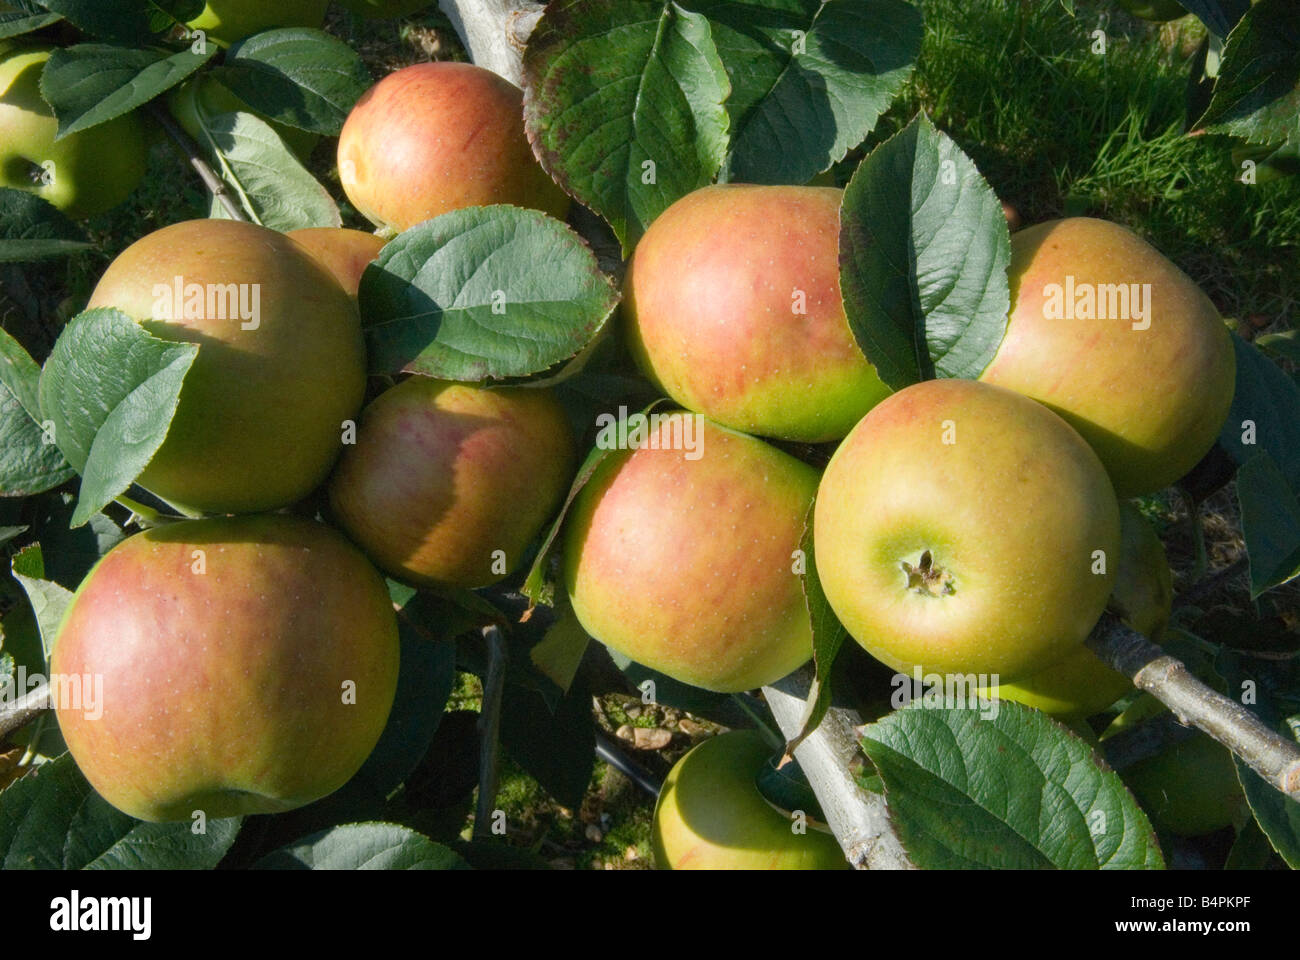 English Apples. Blenheim Orange apples. Lathcoats Apple Farm, Galleywood, Essex UK HOMER SYKES Stock Photo